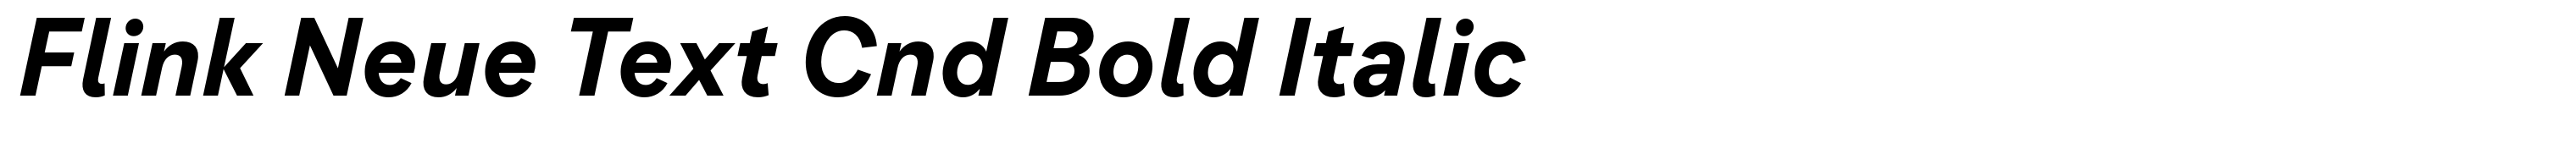 Flink Neue Text Cnd Bold Italic